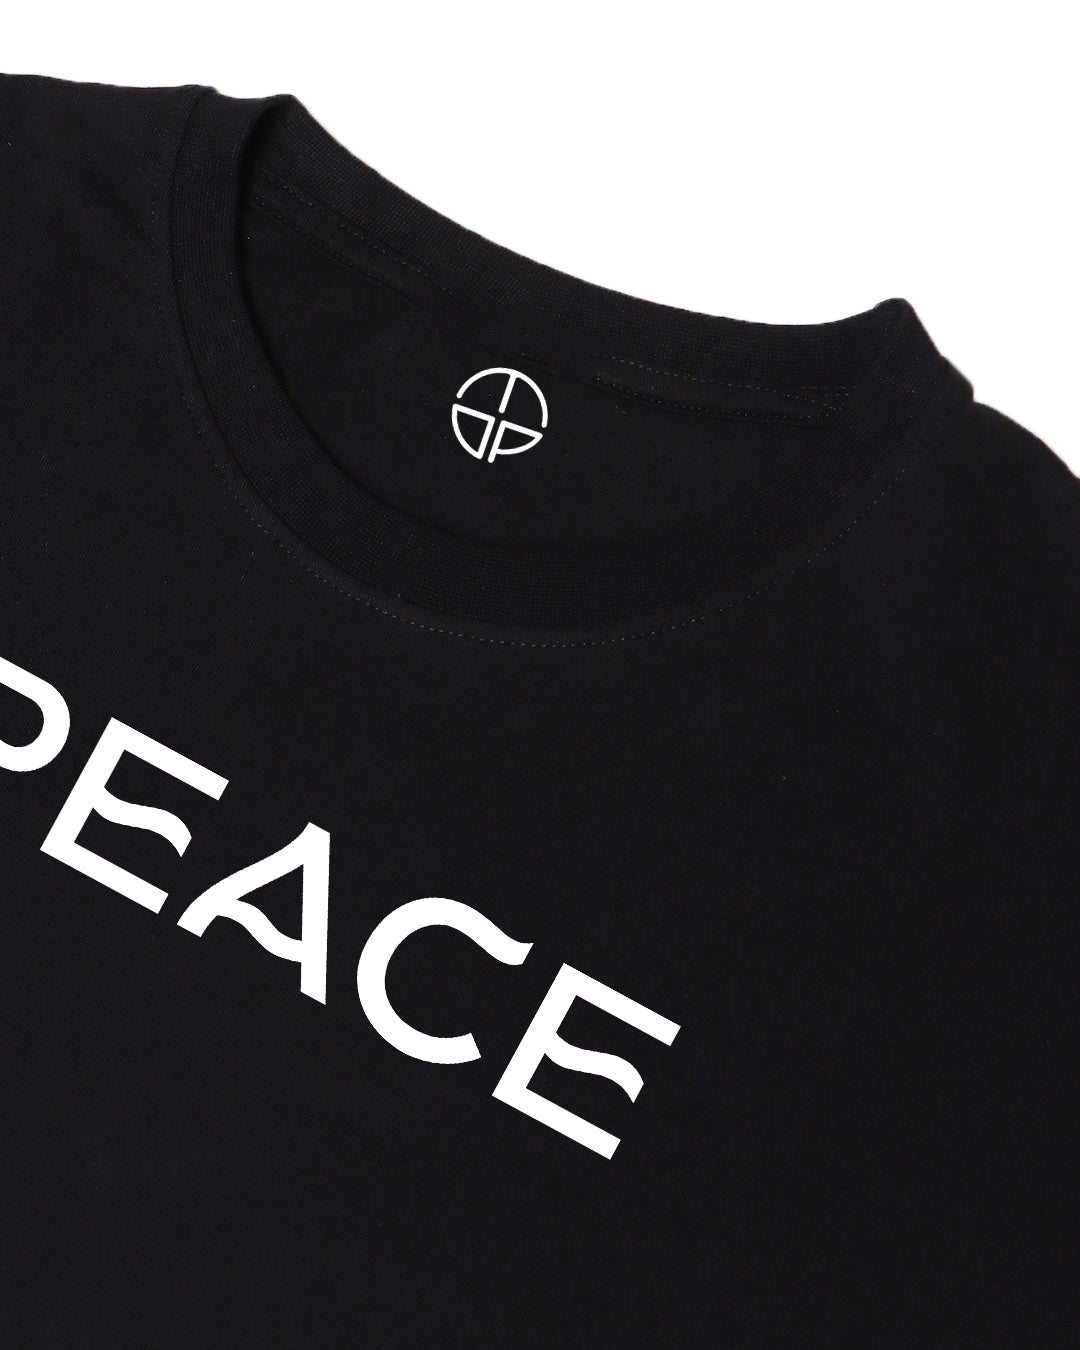 Peace Oversized Men's Tshirt